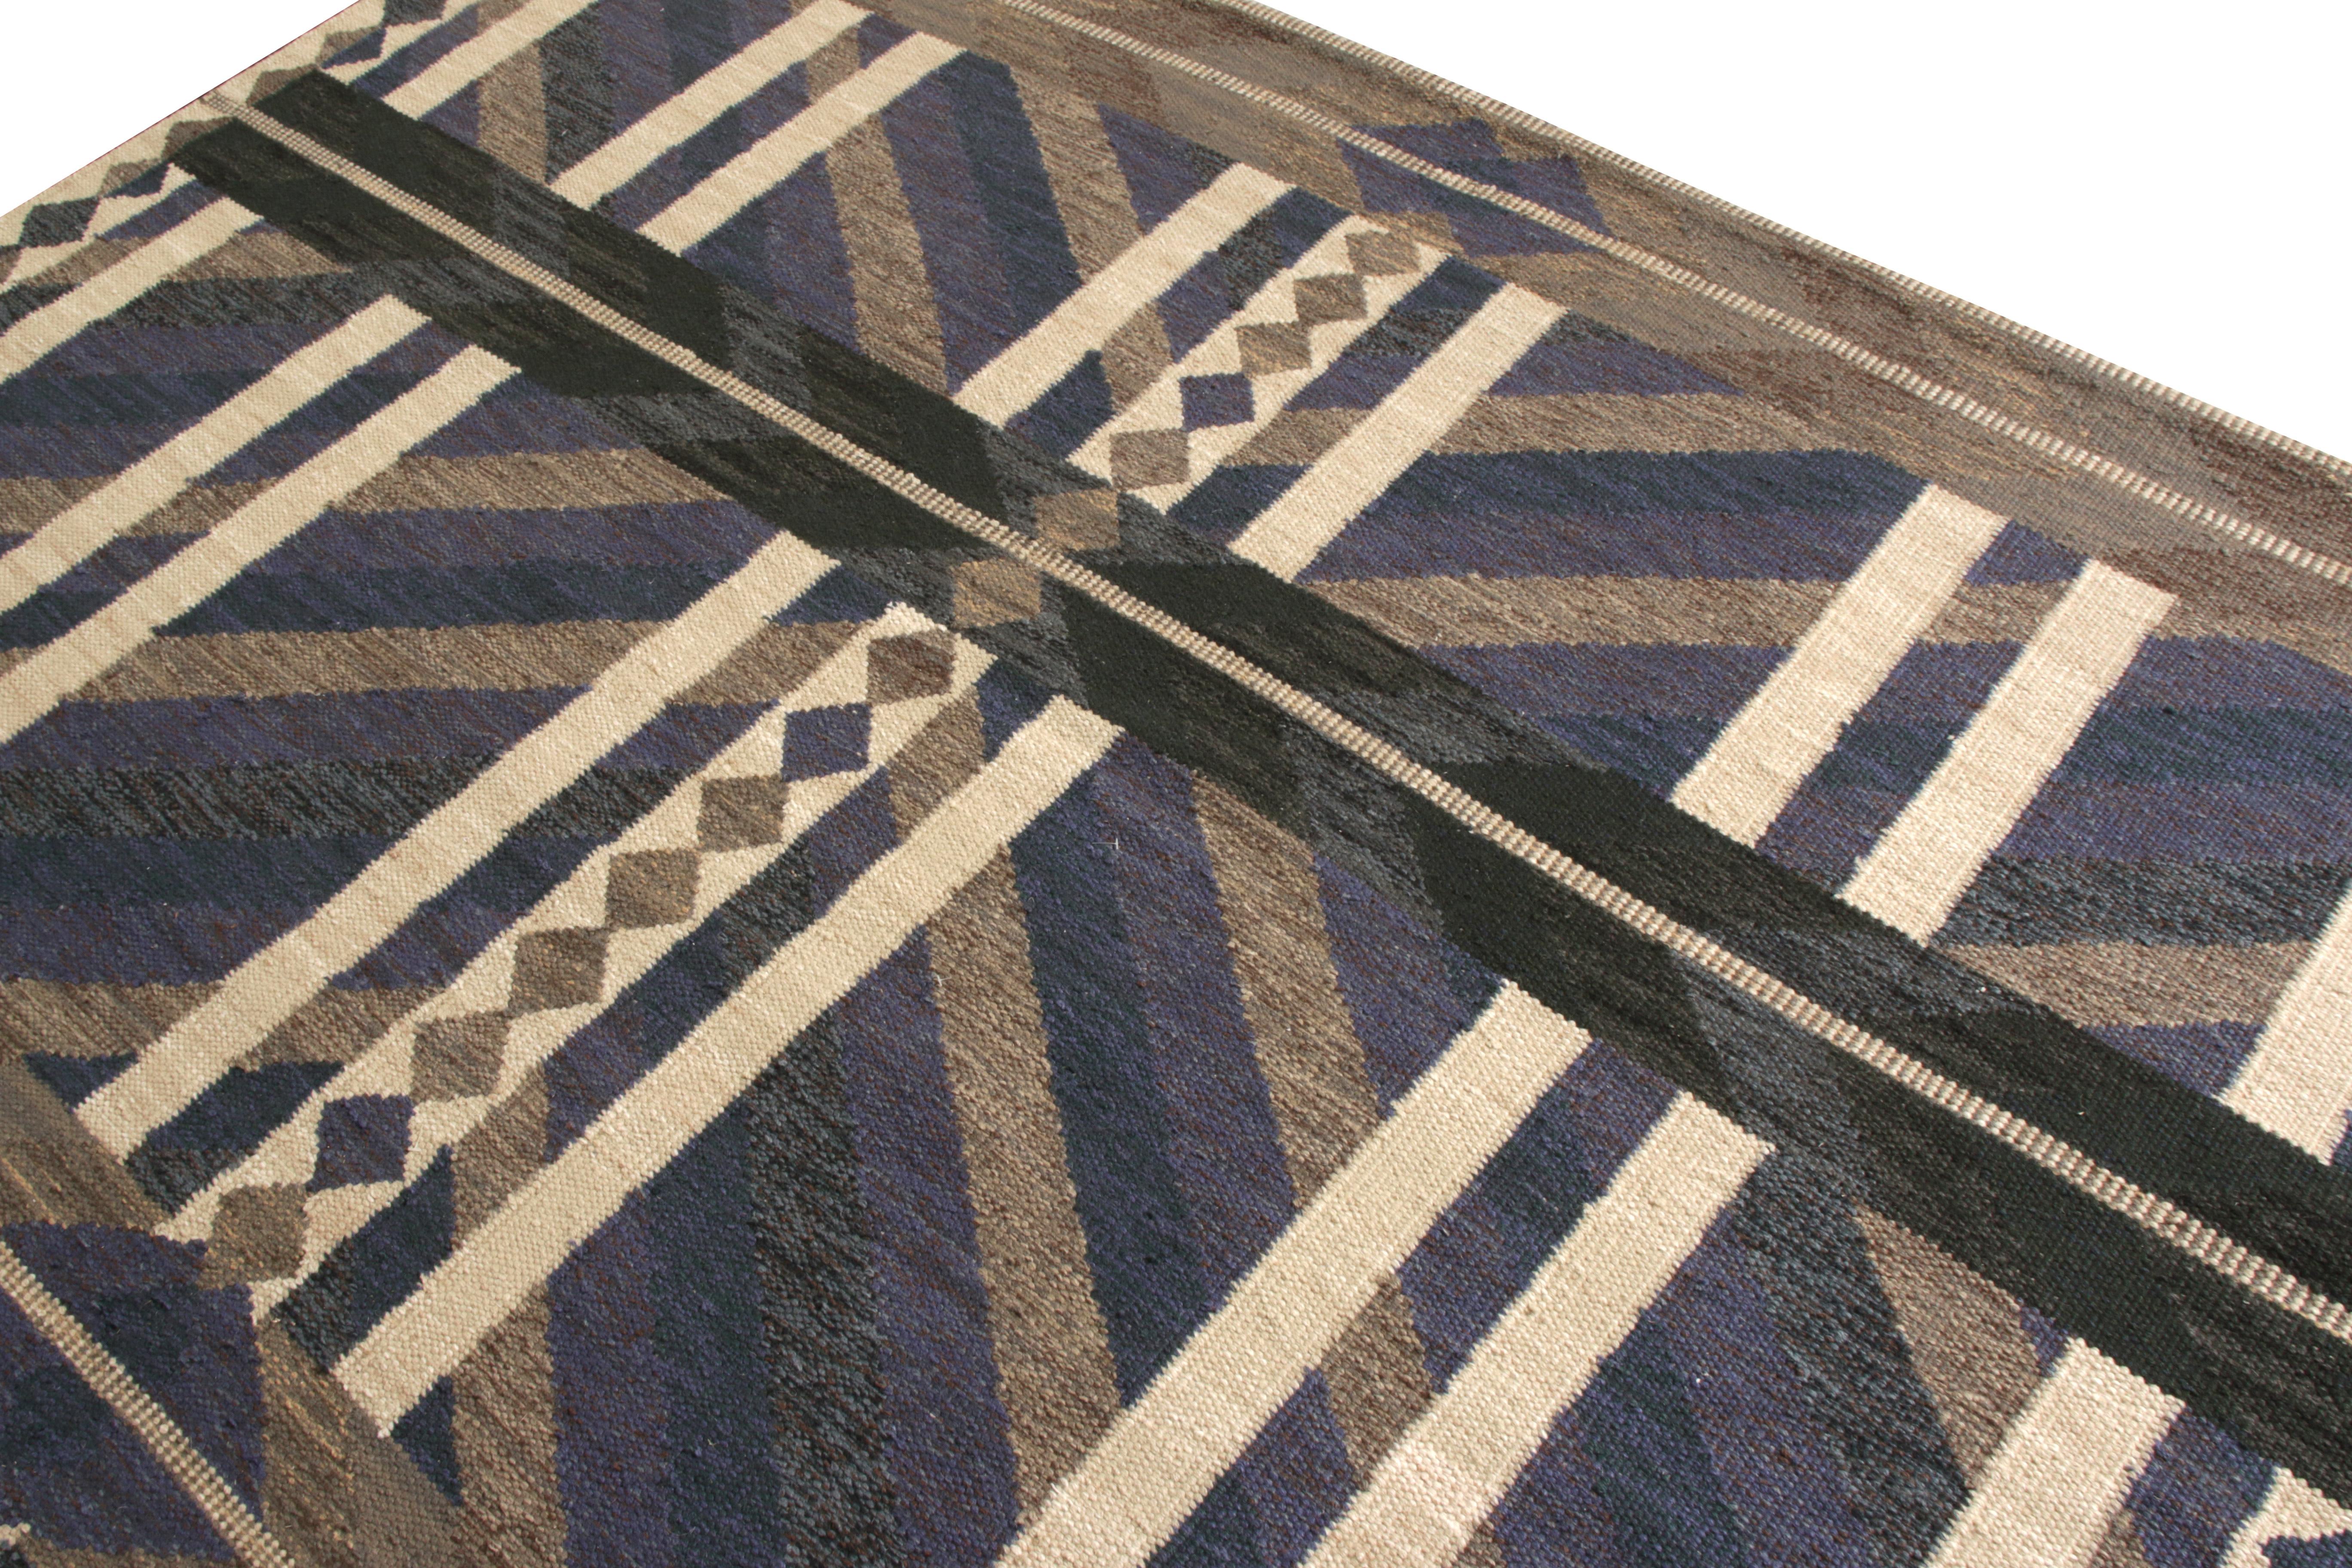 Indian Rug & Kilim’s Scandinavian Style Kilim Rug in Blue, Beige-Brown Geometric Patter For Sale